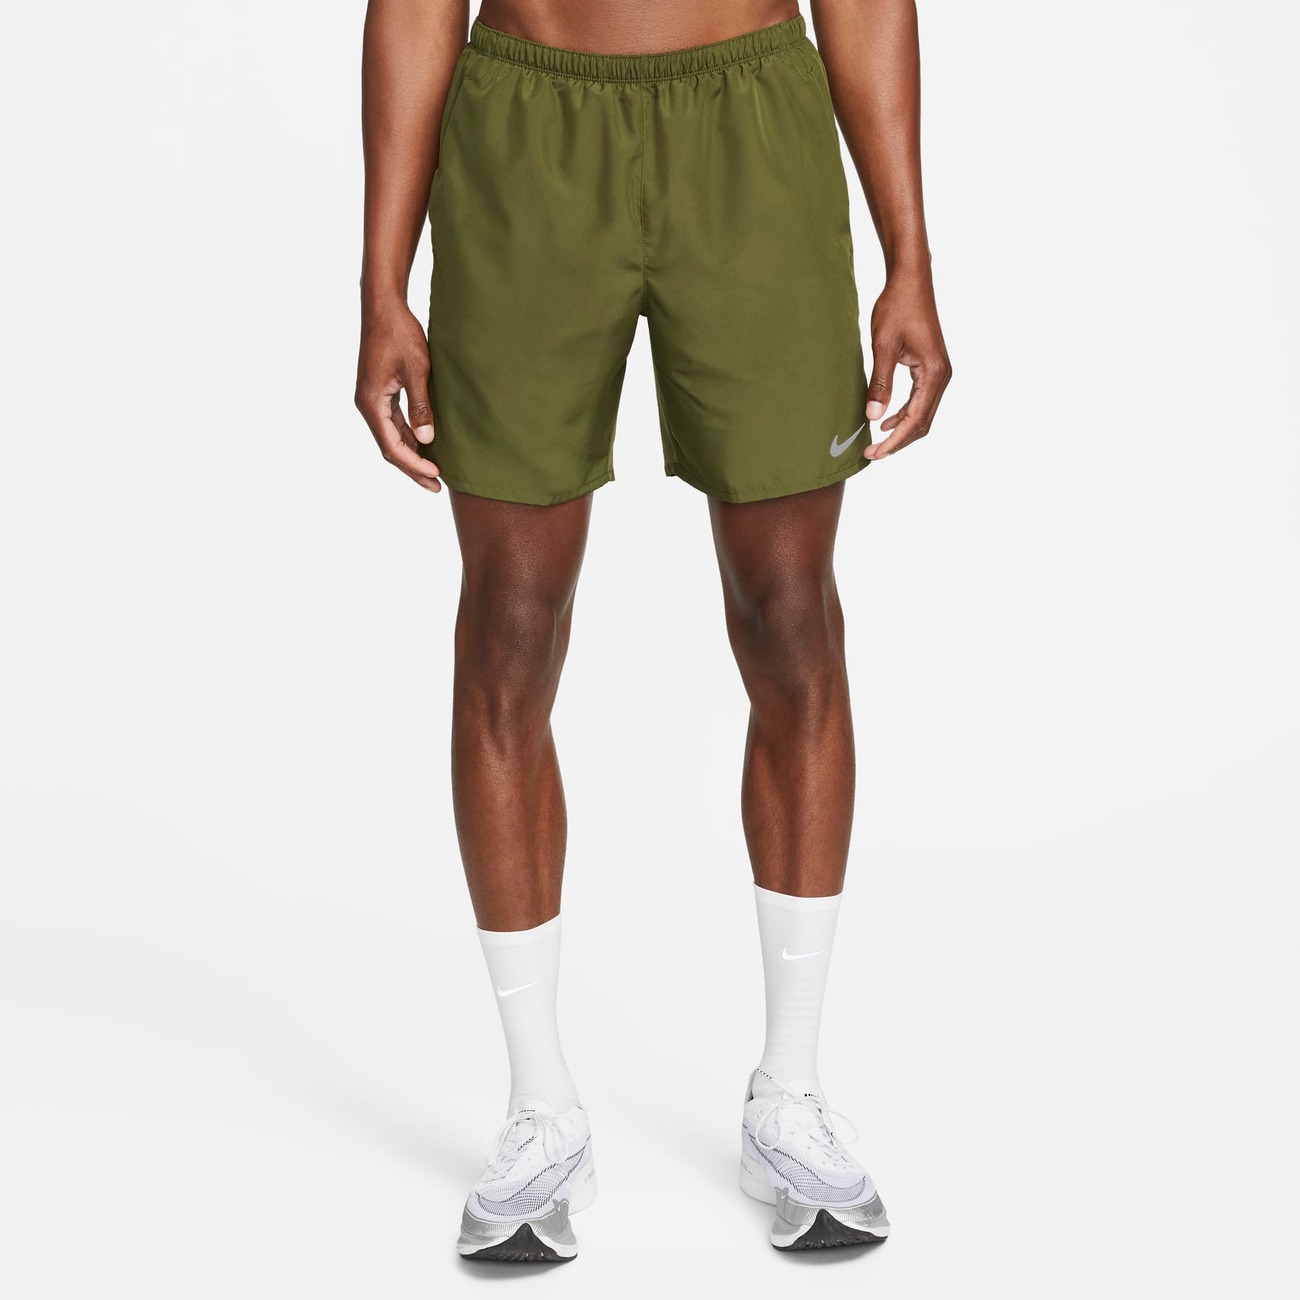 Shorts Nike Challenger Masculino